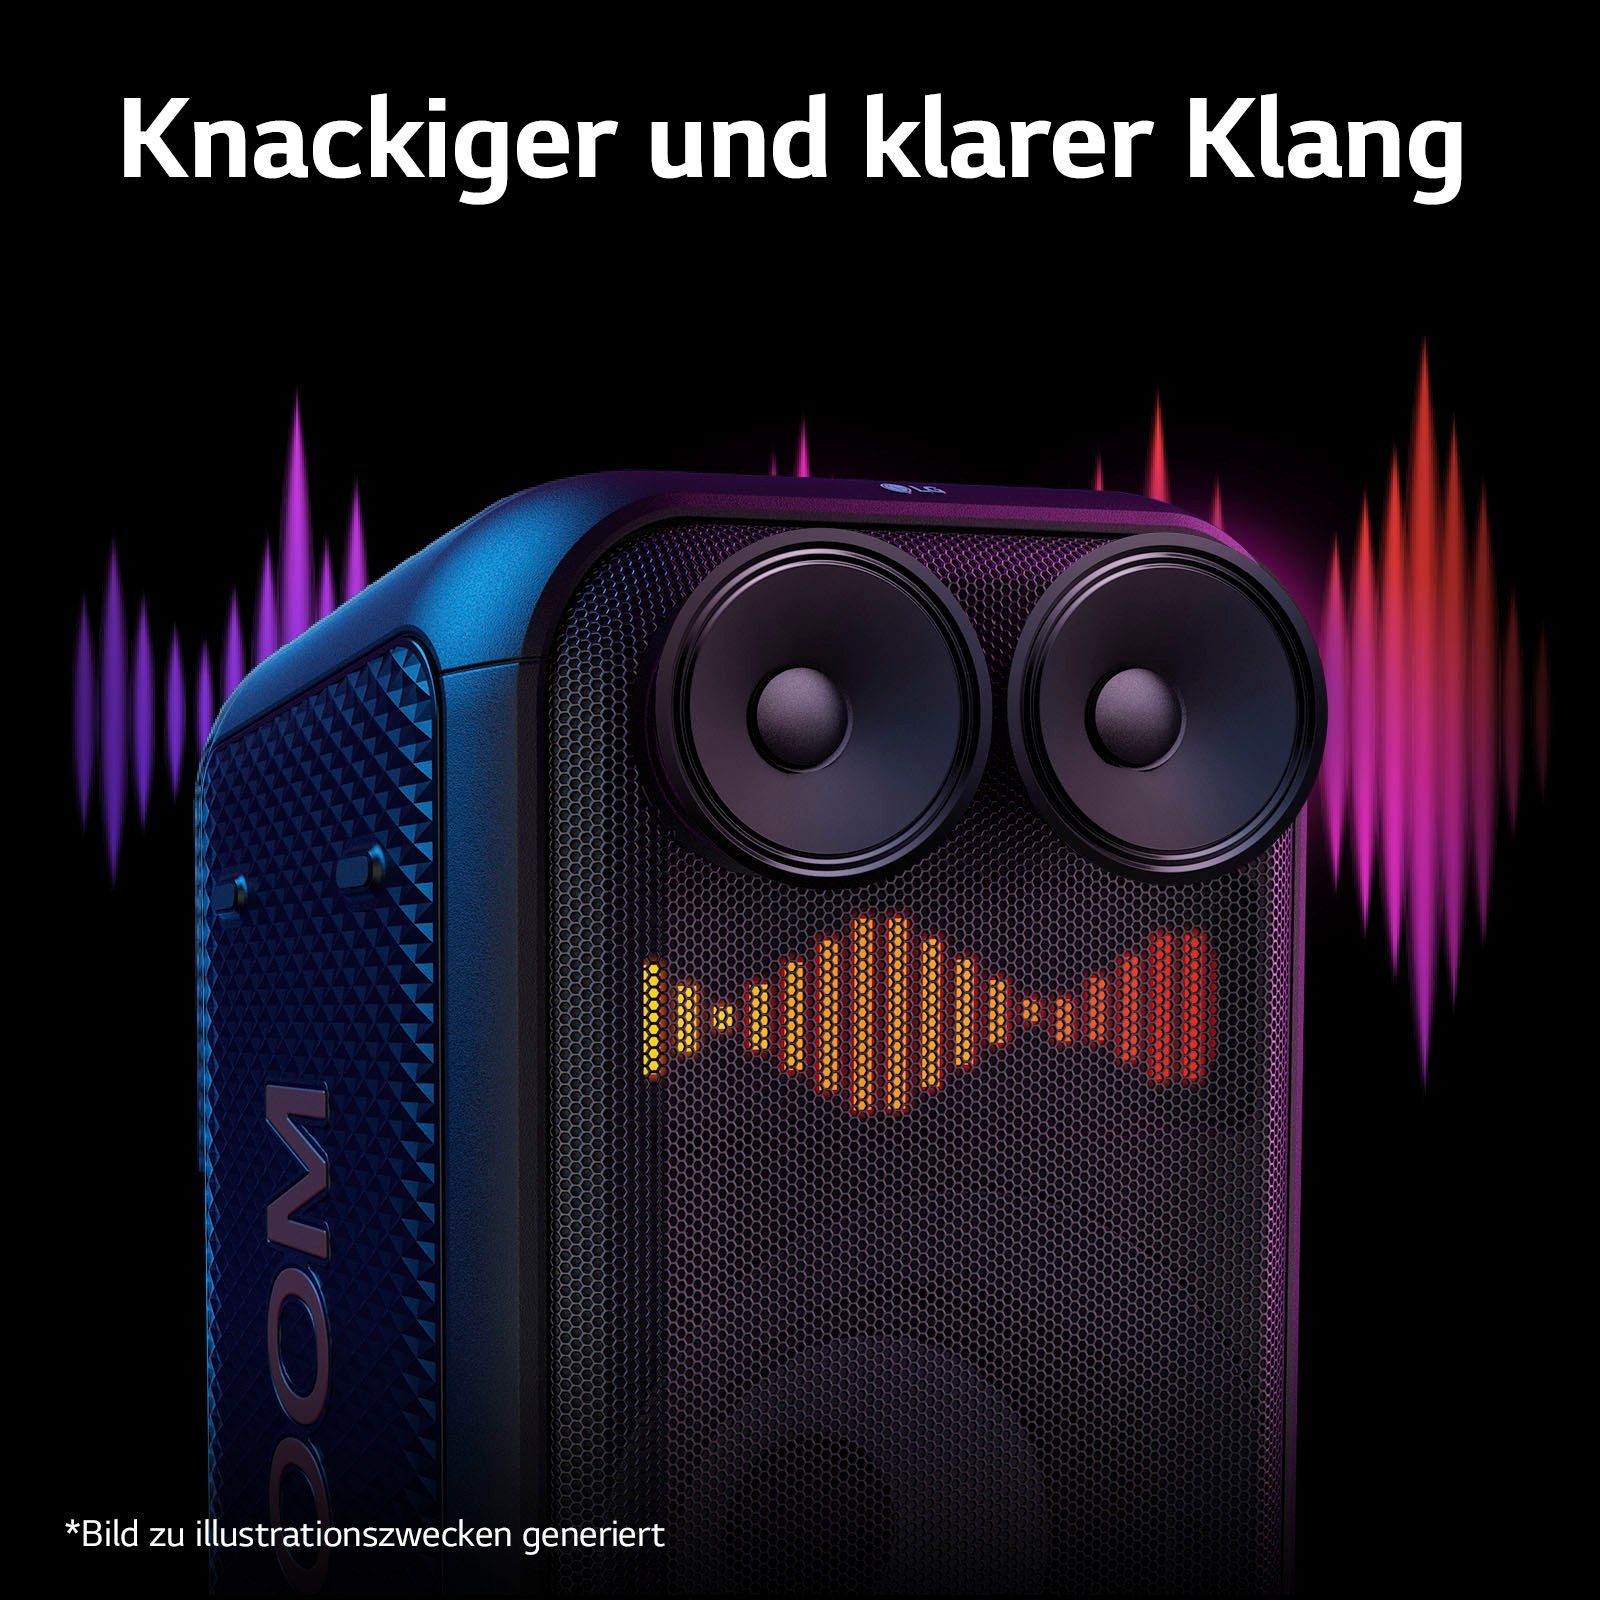 LG (Bluetooth, XBOOM W) 250 XL7S 2.1 Lautsprecher